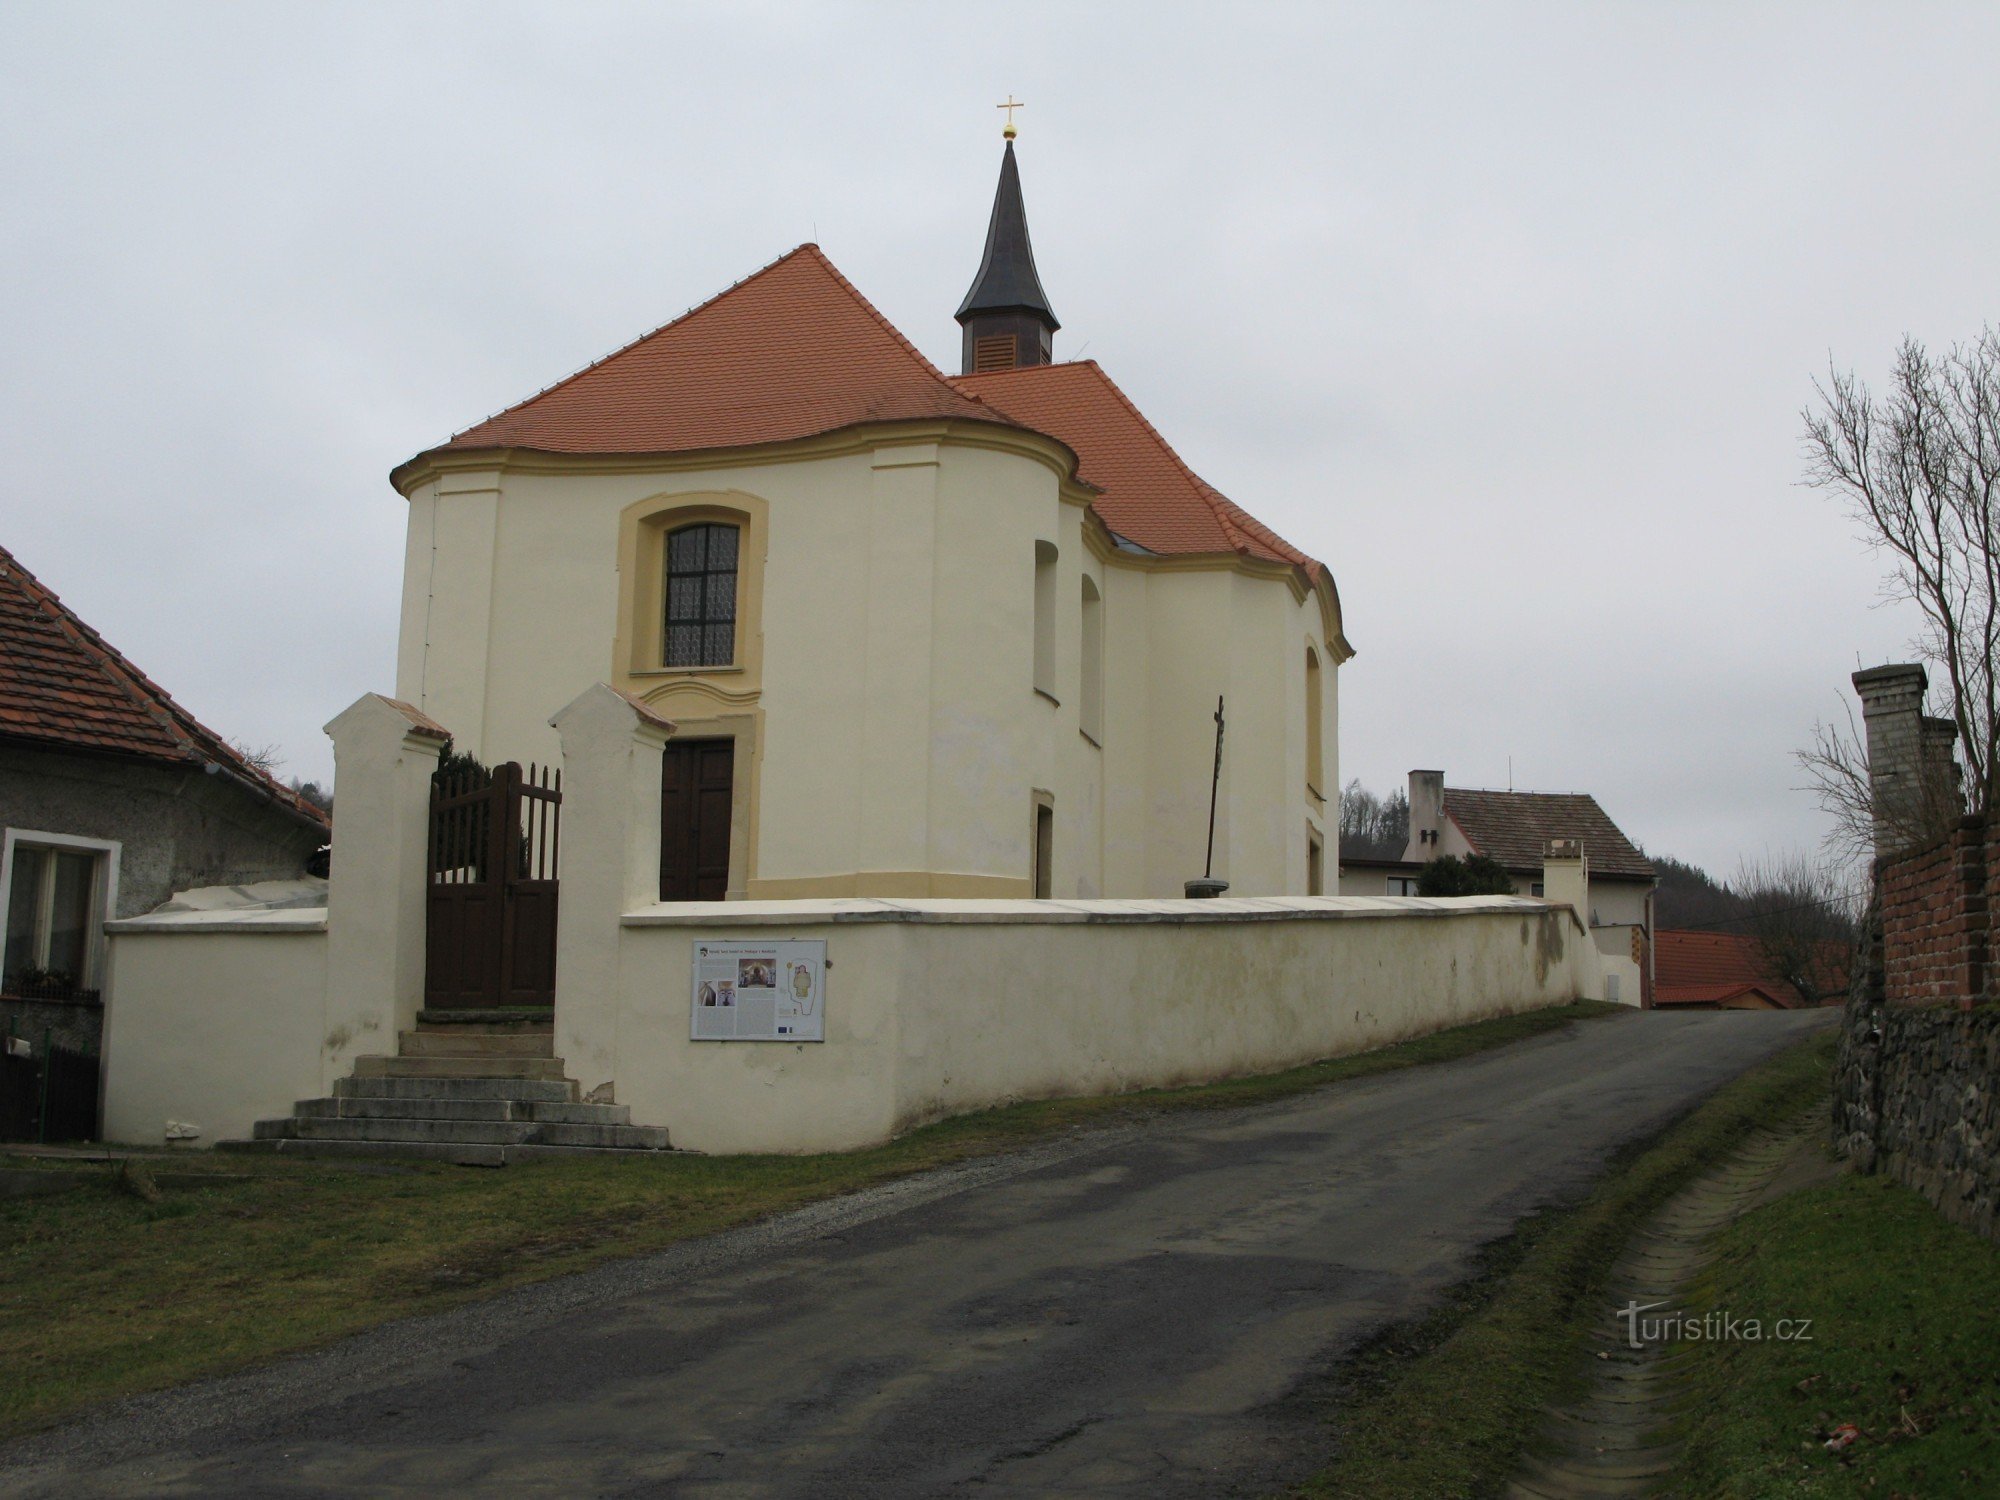 Nezdice - Igreja de St. desenterrar